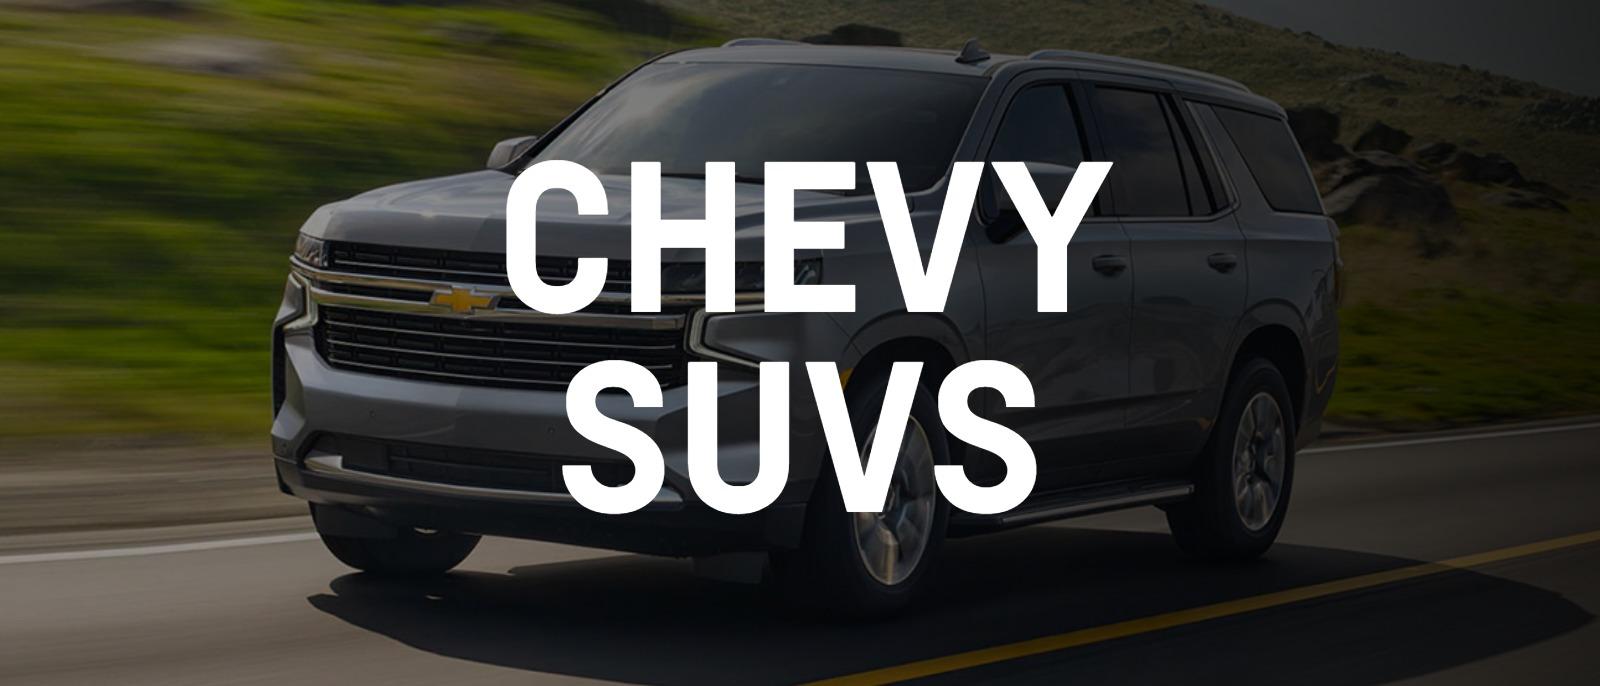 Chevy SUVs